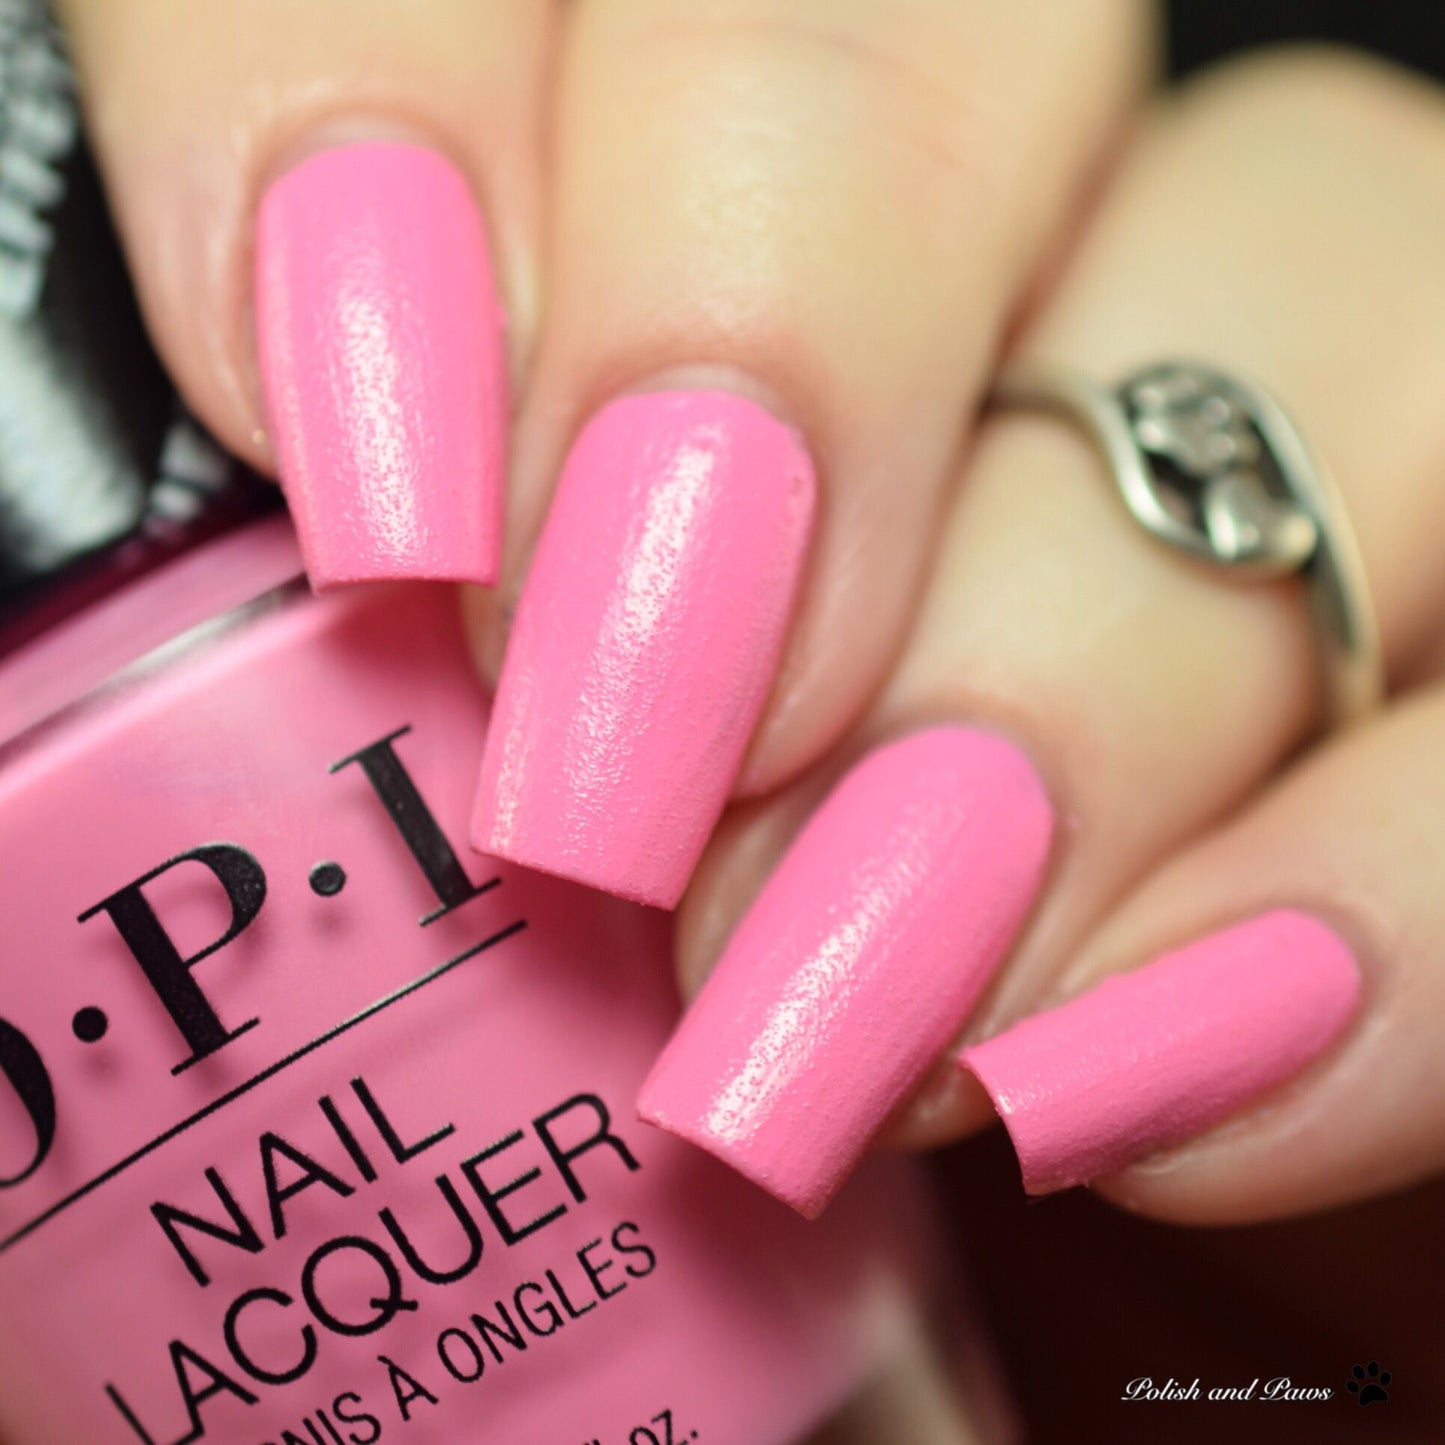 Leather Electrifyin' Pink (OPI Nail Polish)